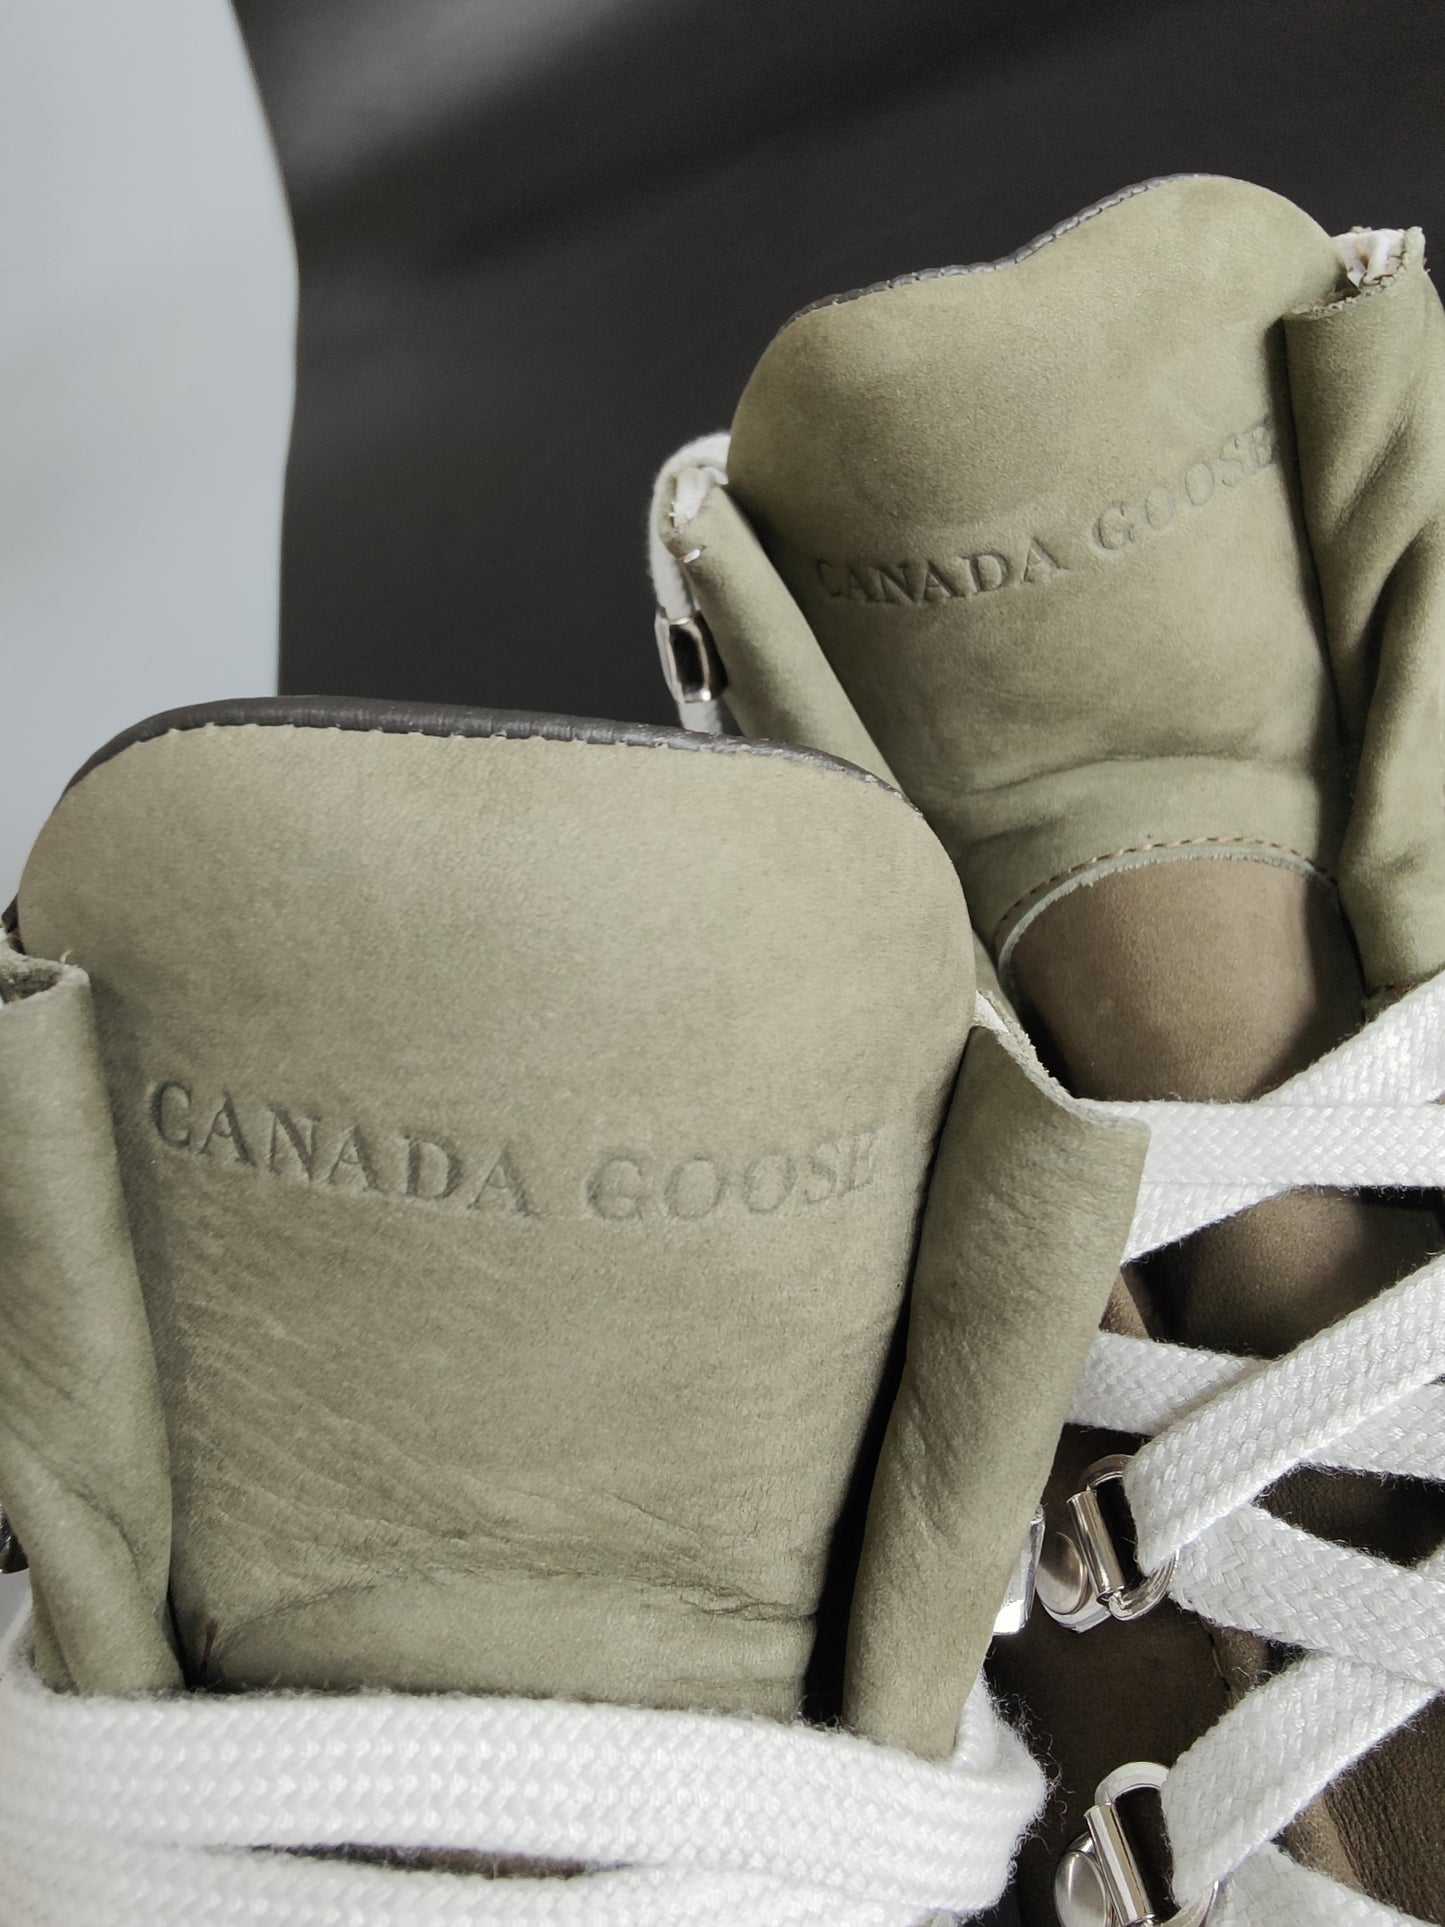 Canada Goose Women's Journey Boots in Military Green/Black UK 4 / EU 37